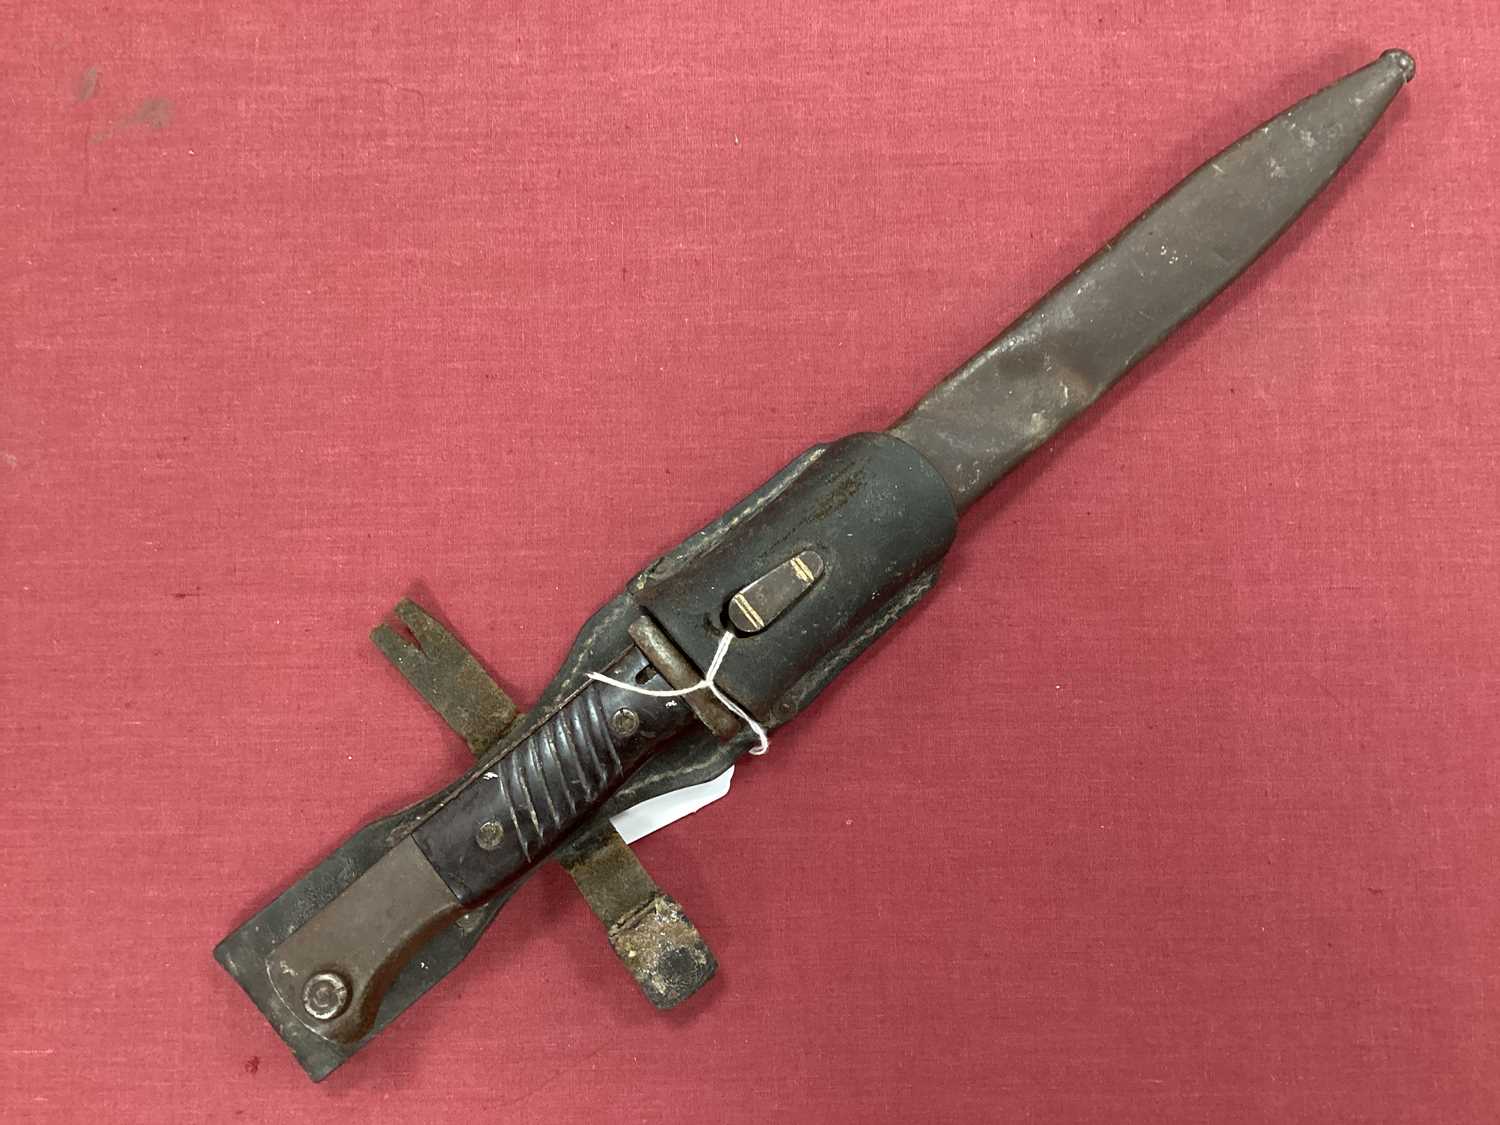 Lot 776 - WW2 German K98 bayonet with markings 1850 42 c...